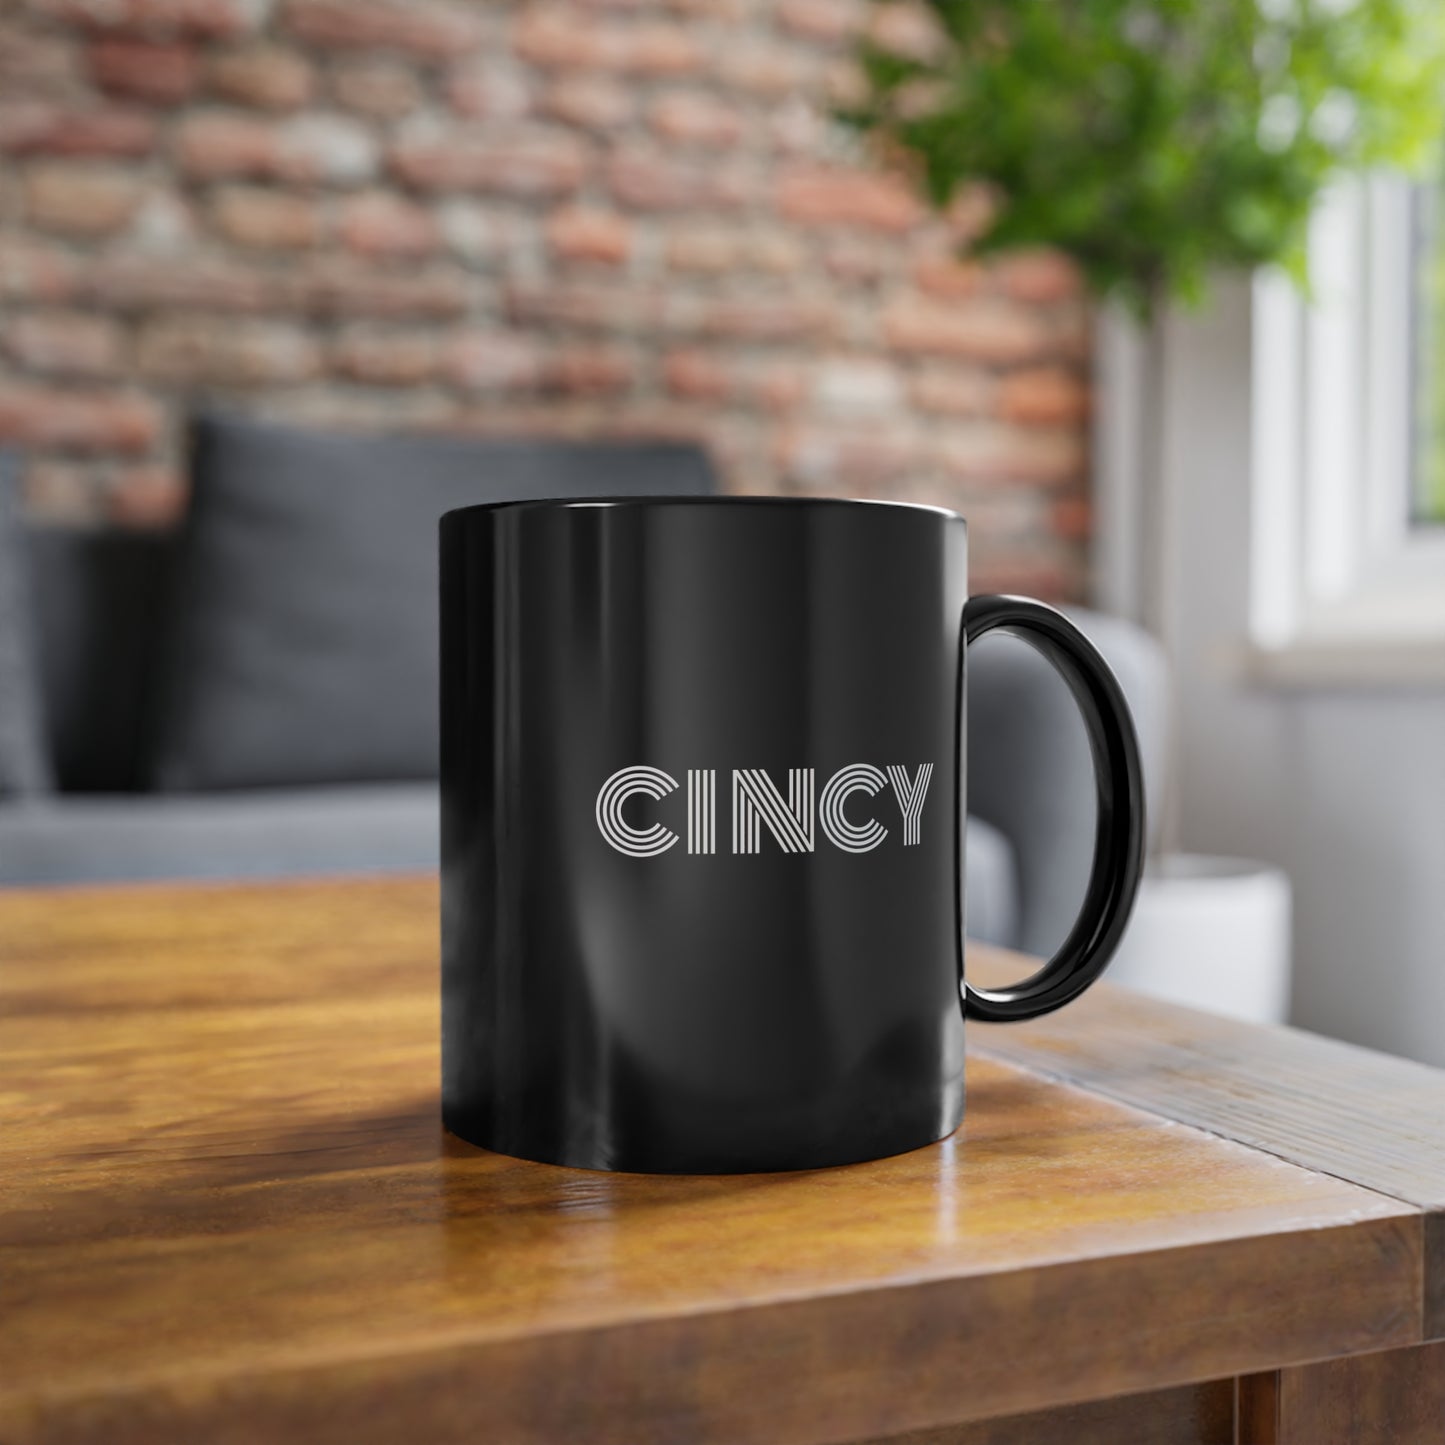 CINCY, CITY MUG, Black Coffee Cup, 11oz